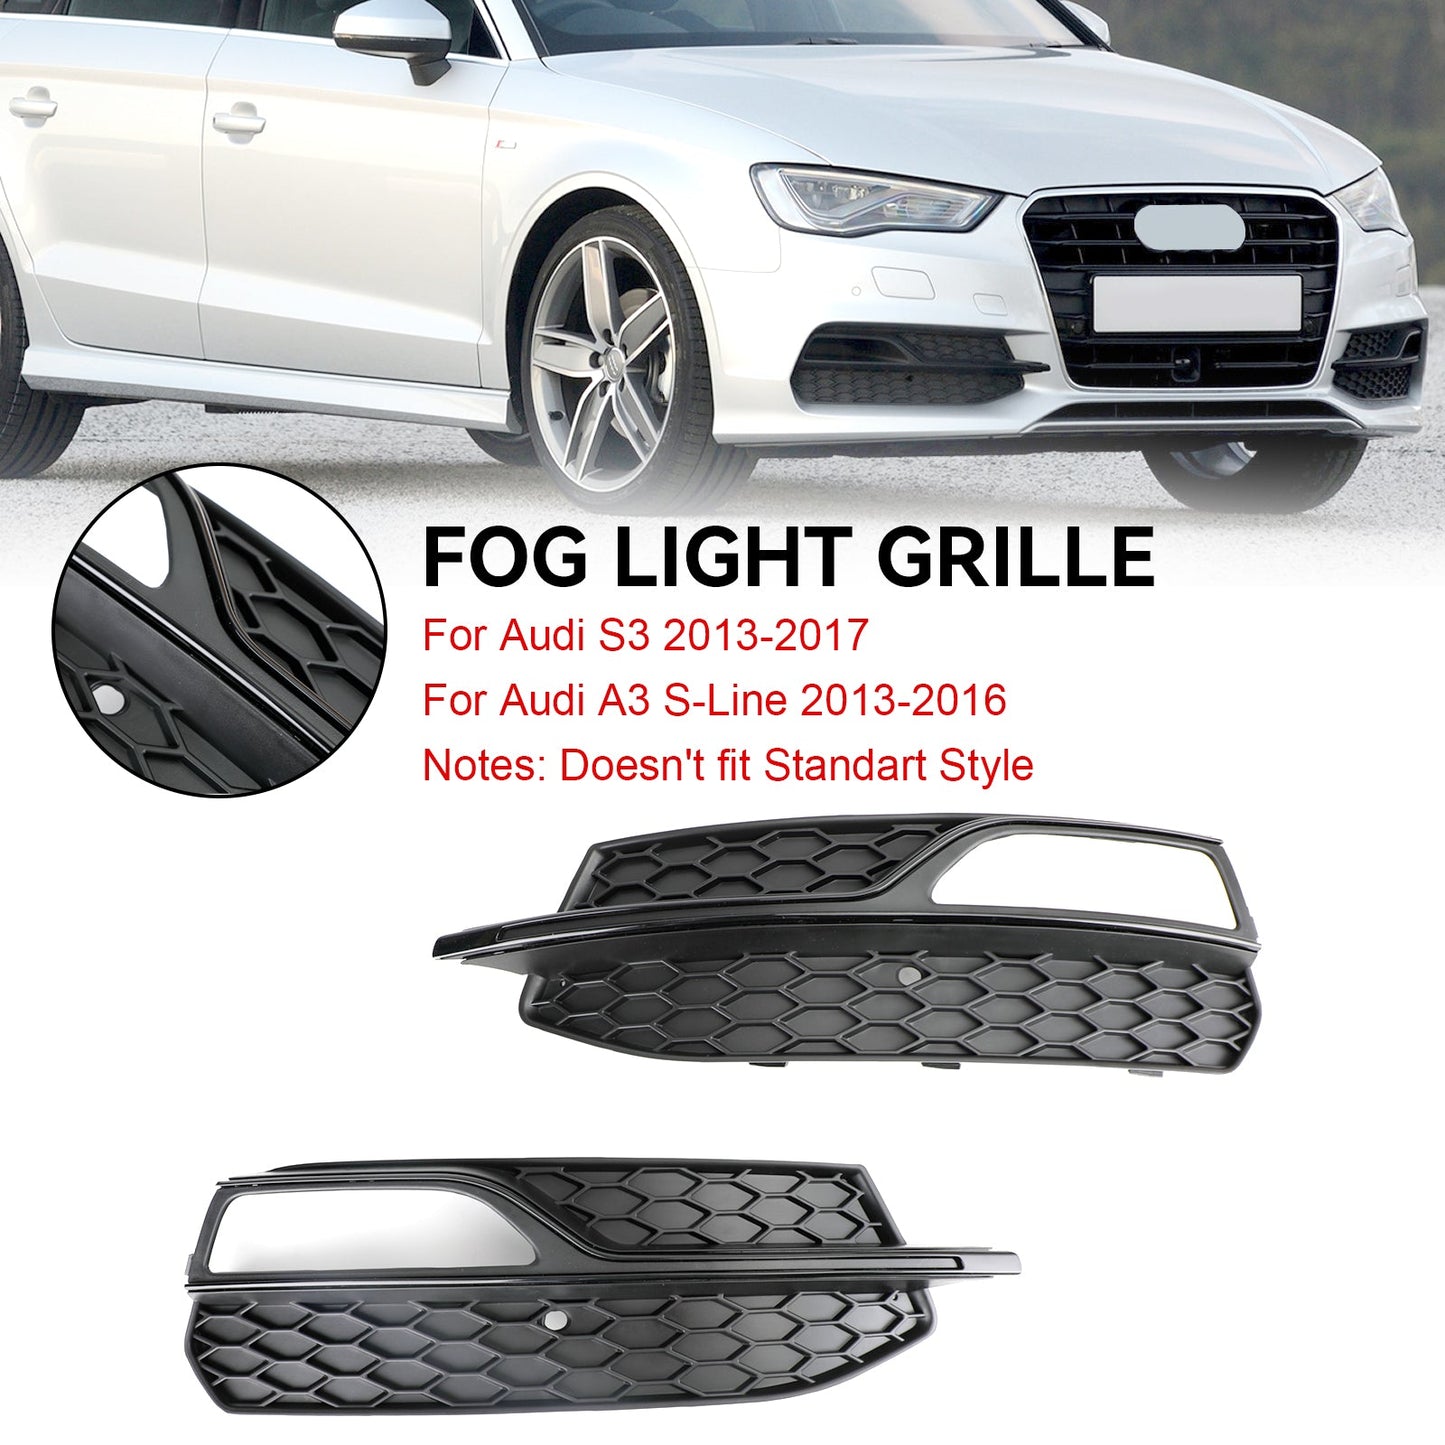 2013-2017 Audi S3 Lower Bumper Fog Light Cover Grill Grille